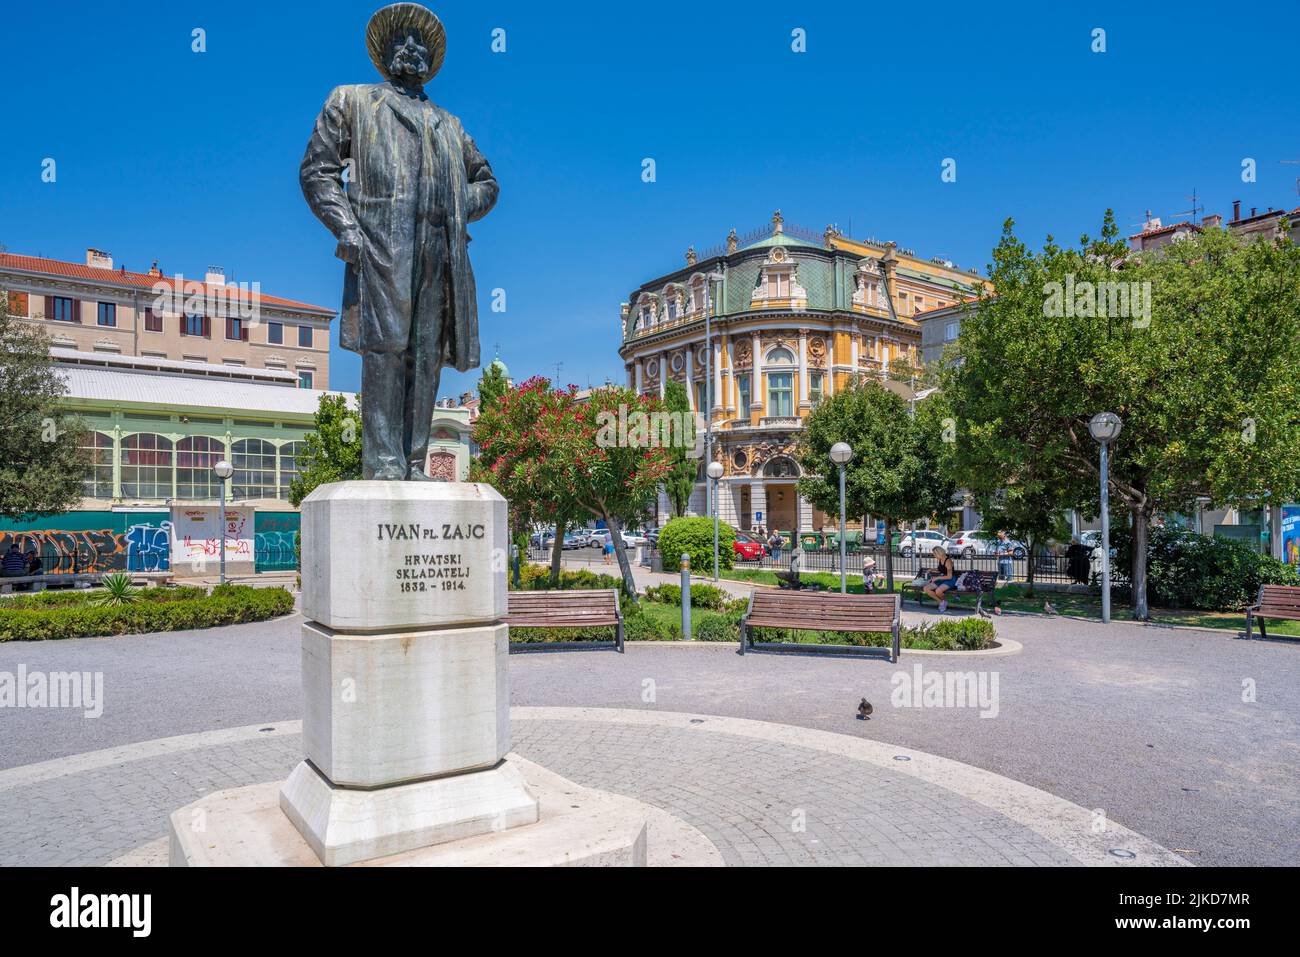 View of Ivan Zajc statue in Theatre Park and surrounding buildings, Rijeka, Croatia, Europe Stock Photo